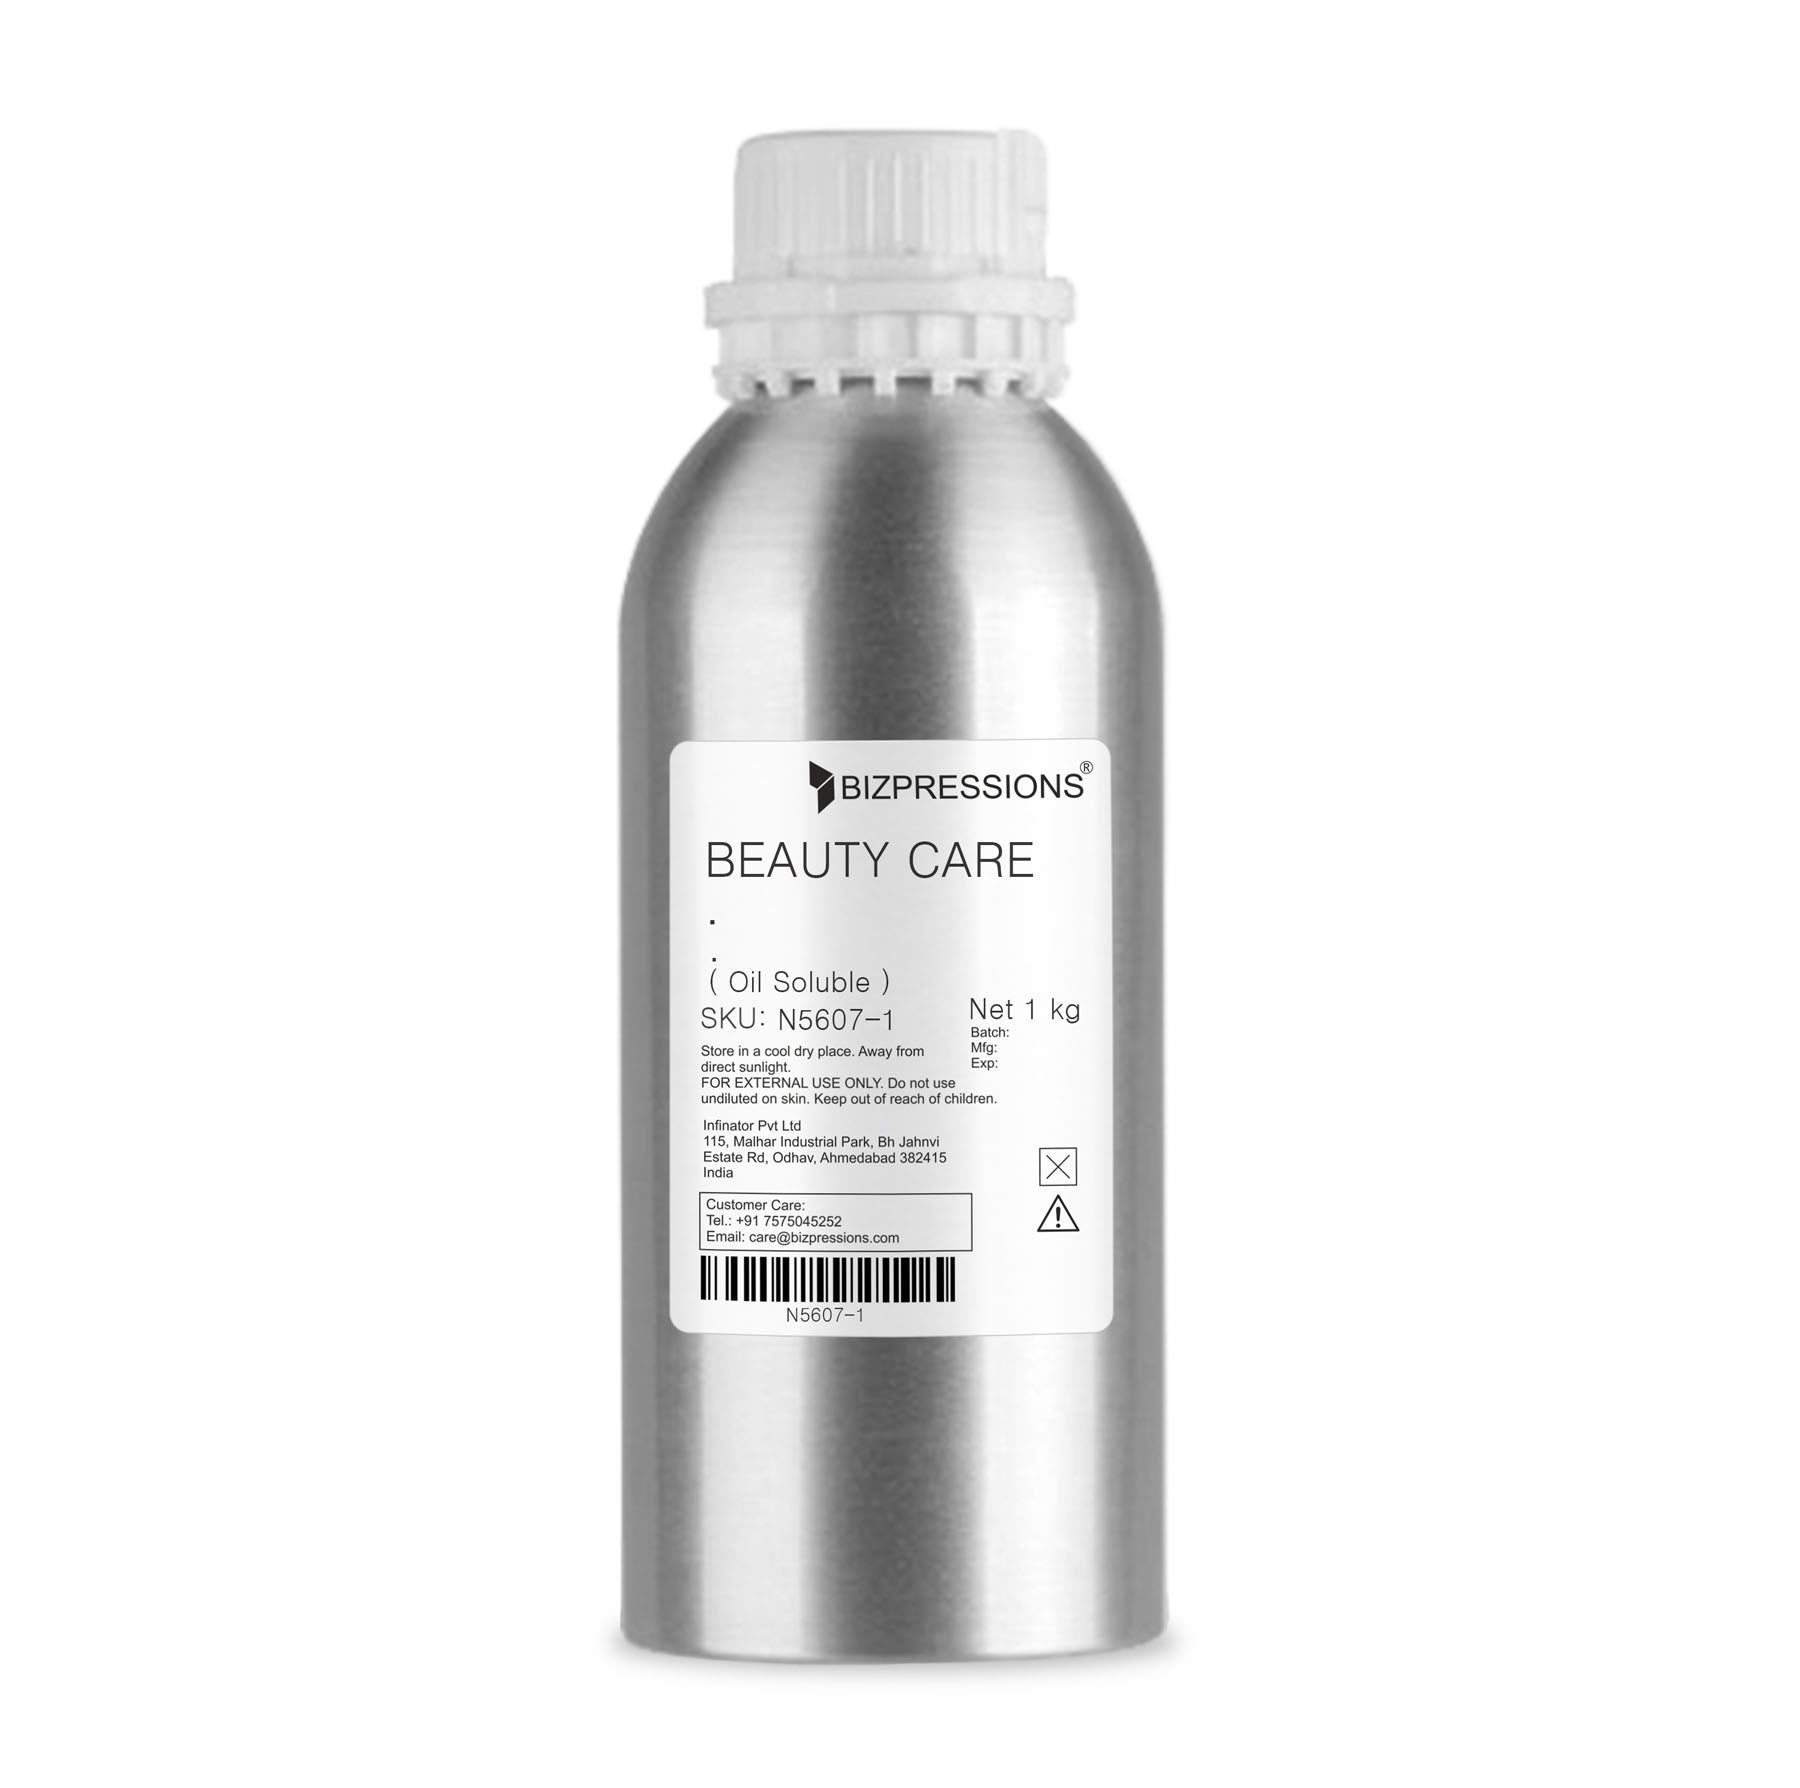 BEAUTY CARE - Fragrance ( Oil Soluble ) - 1 kg